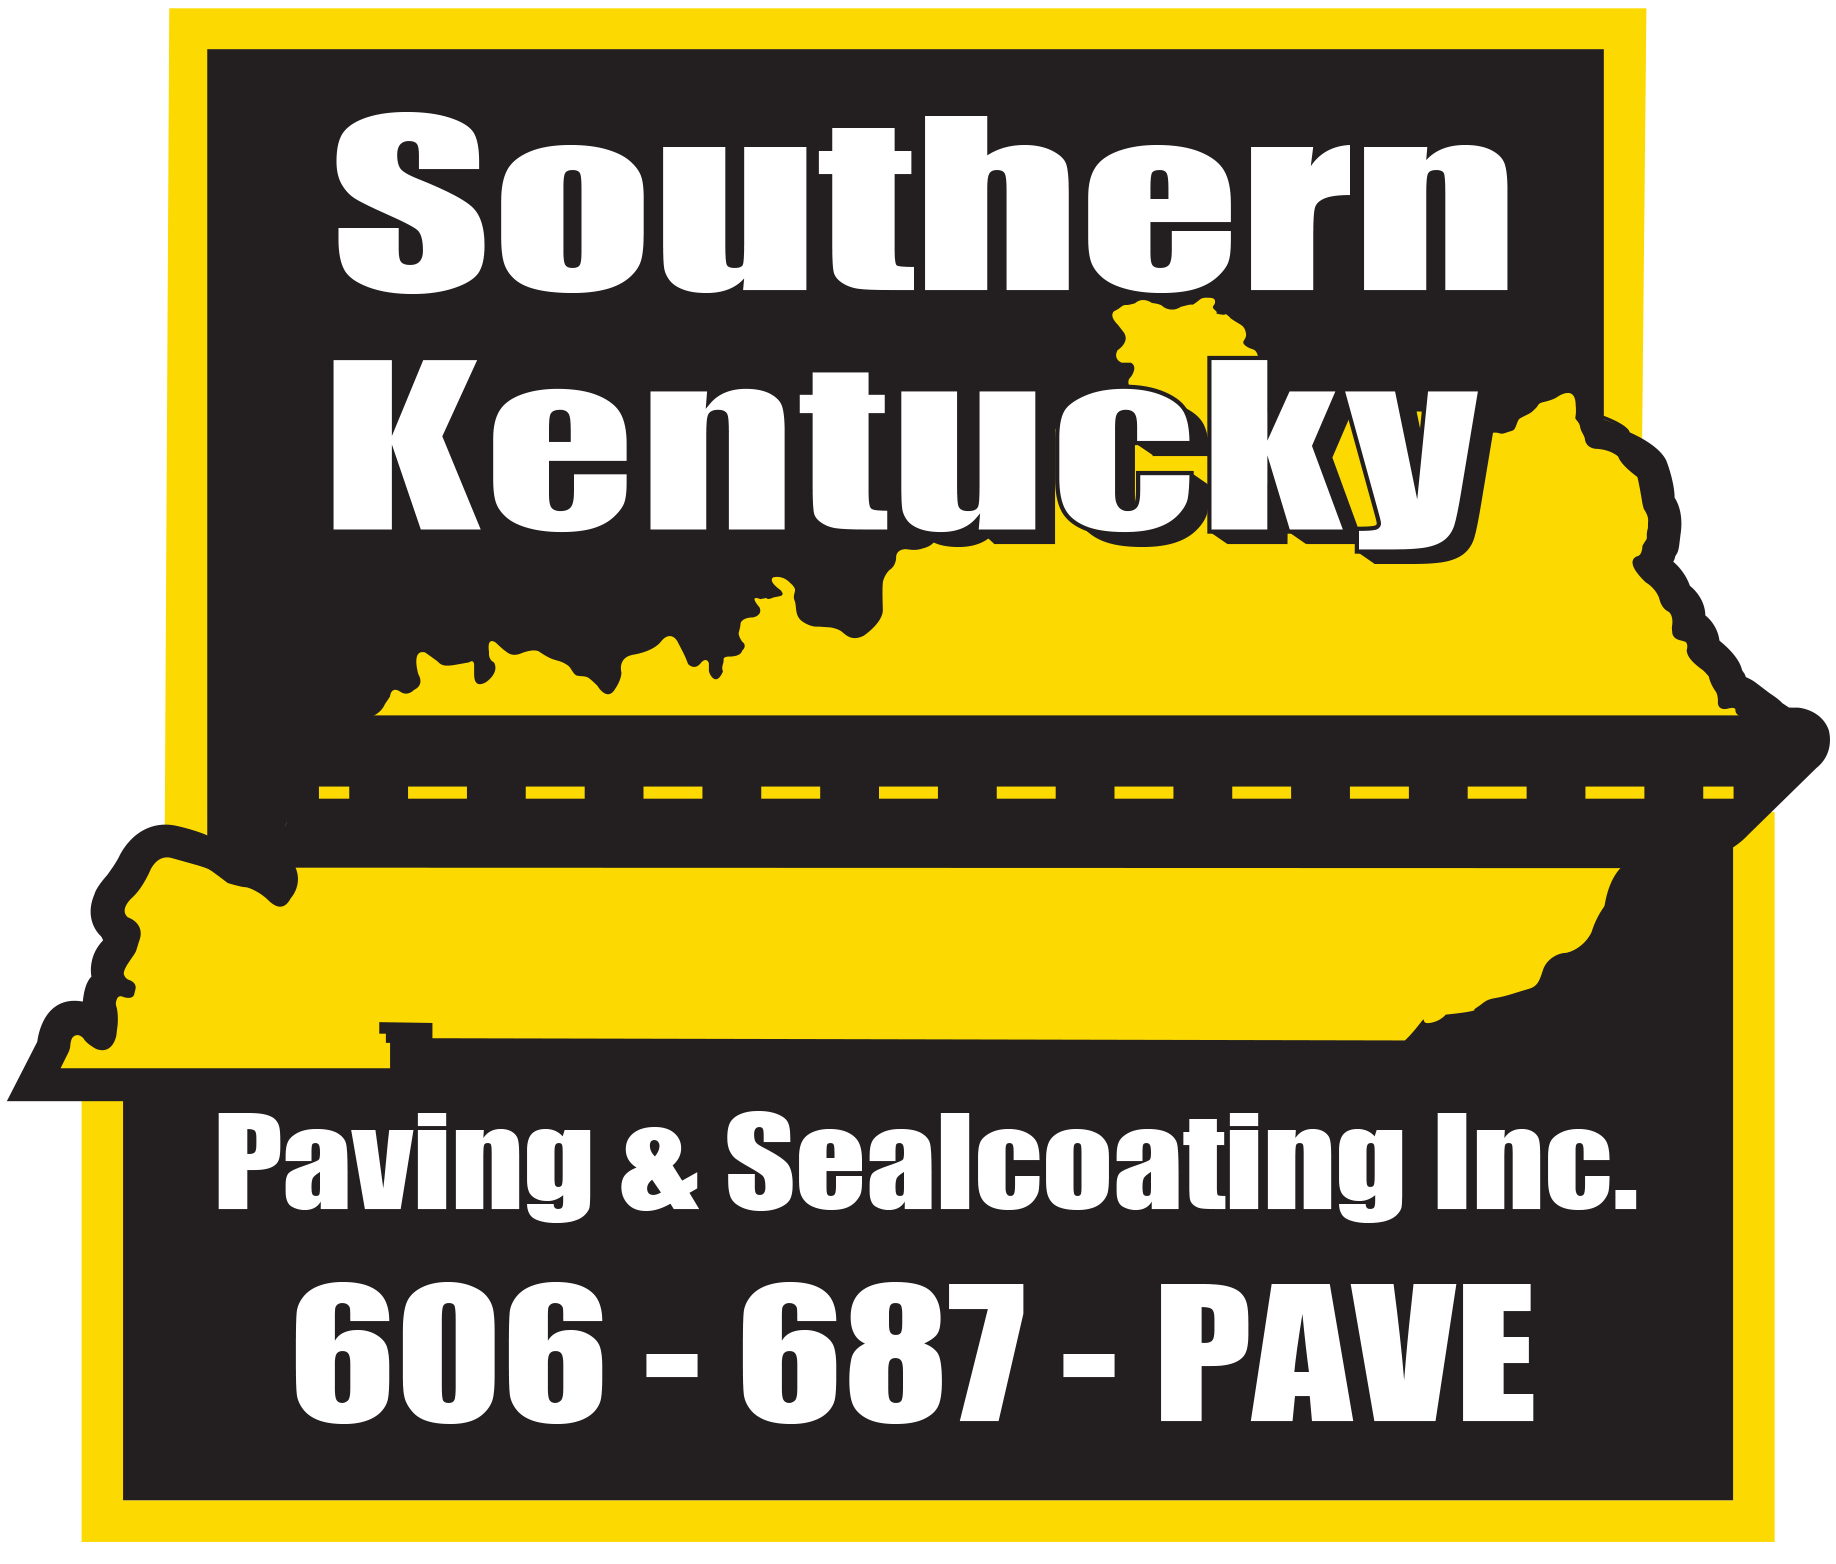 Southern Kentucky Paving